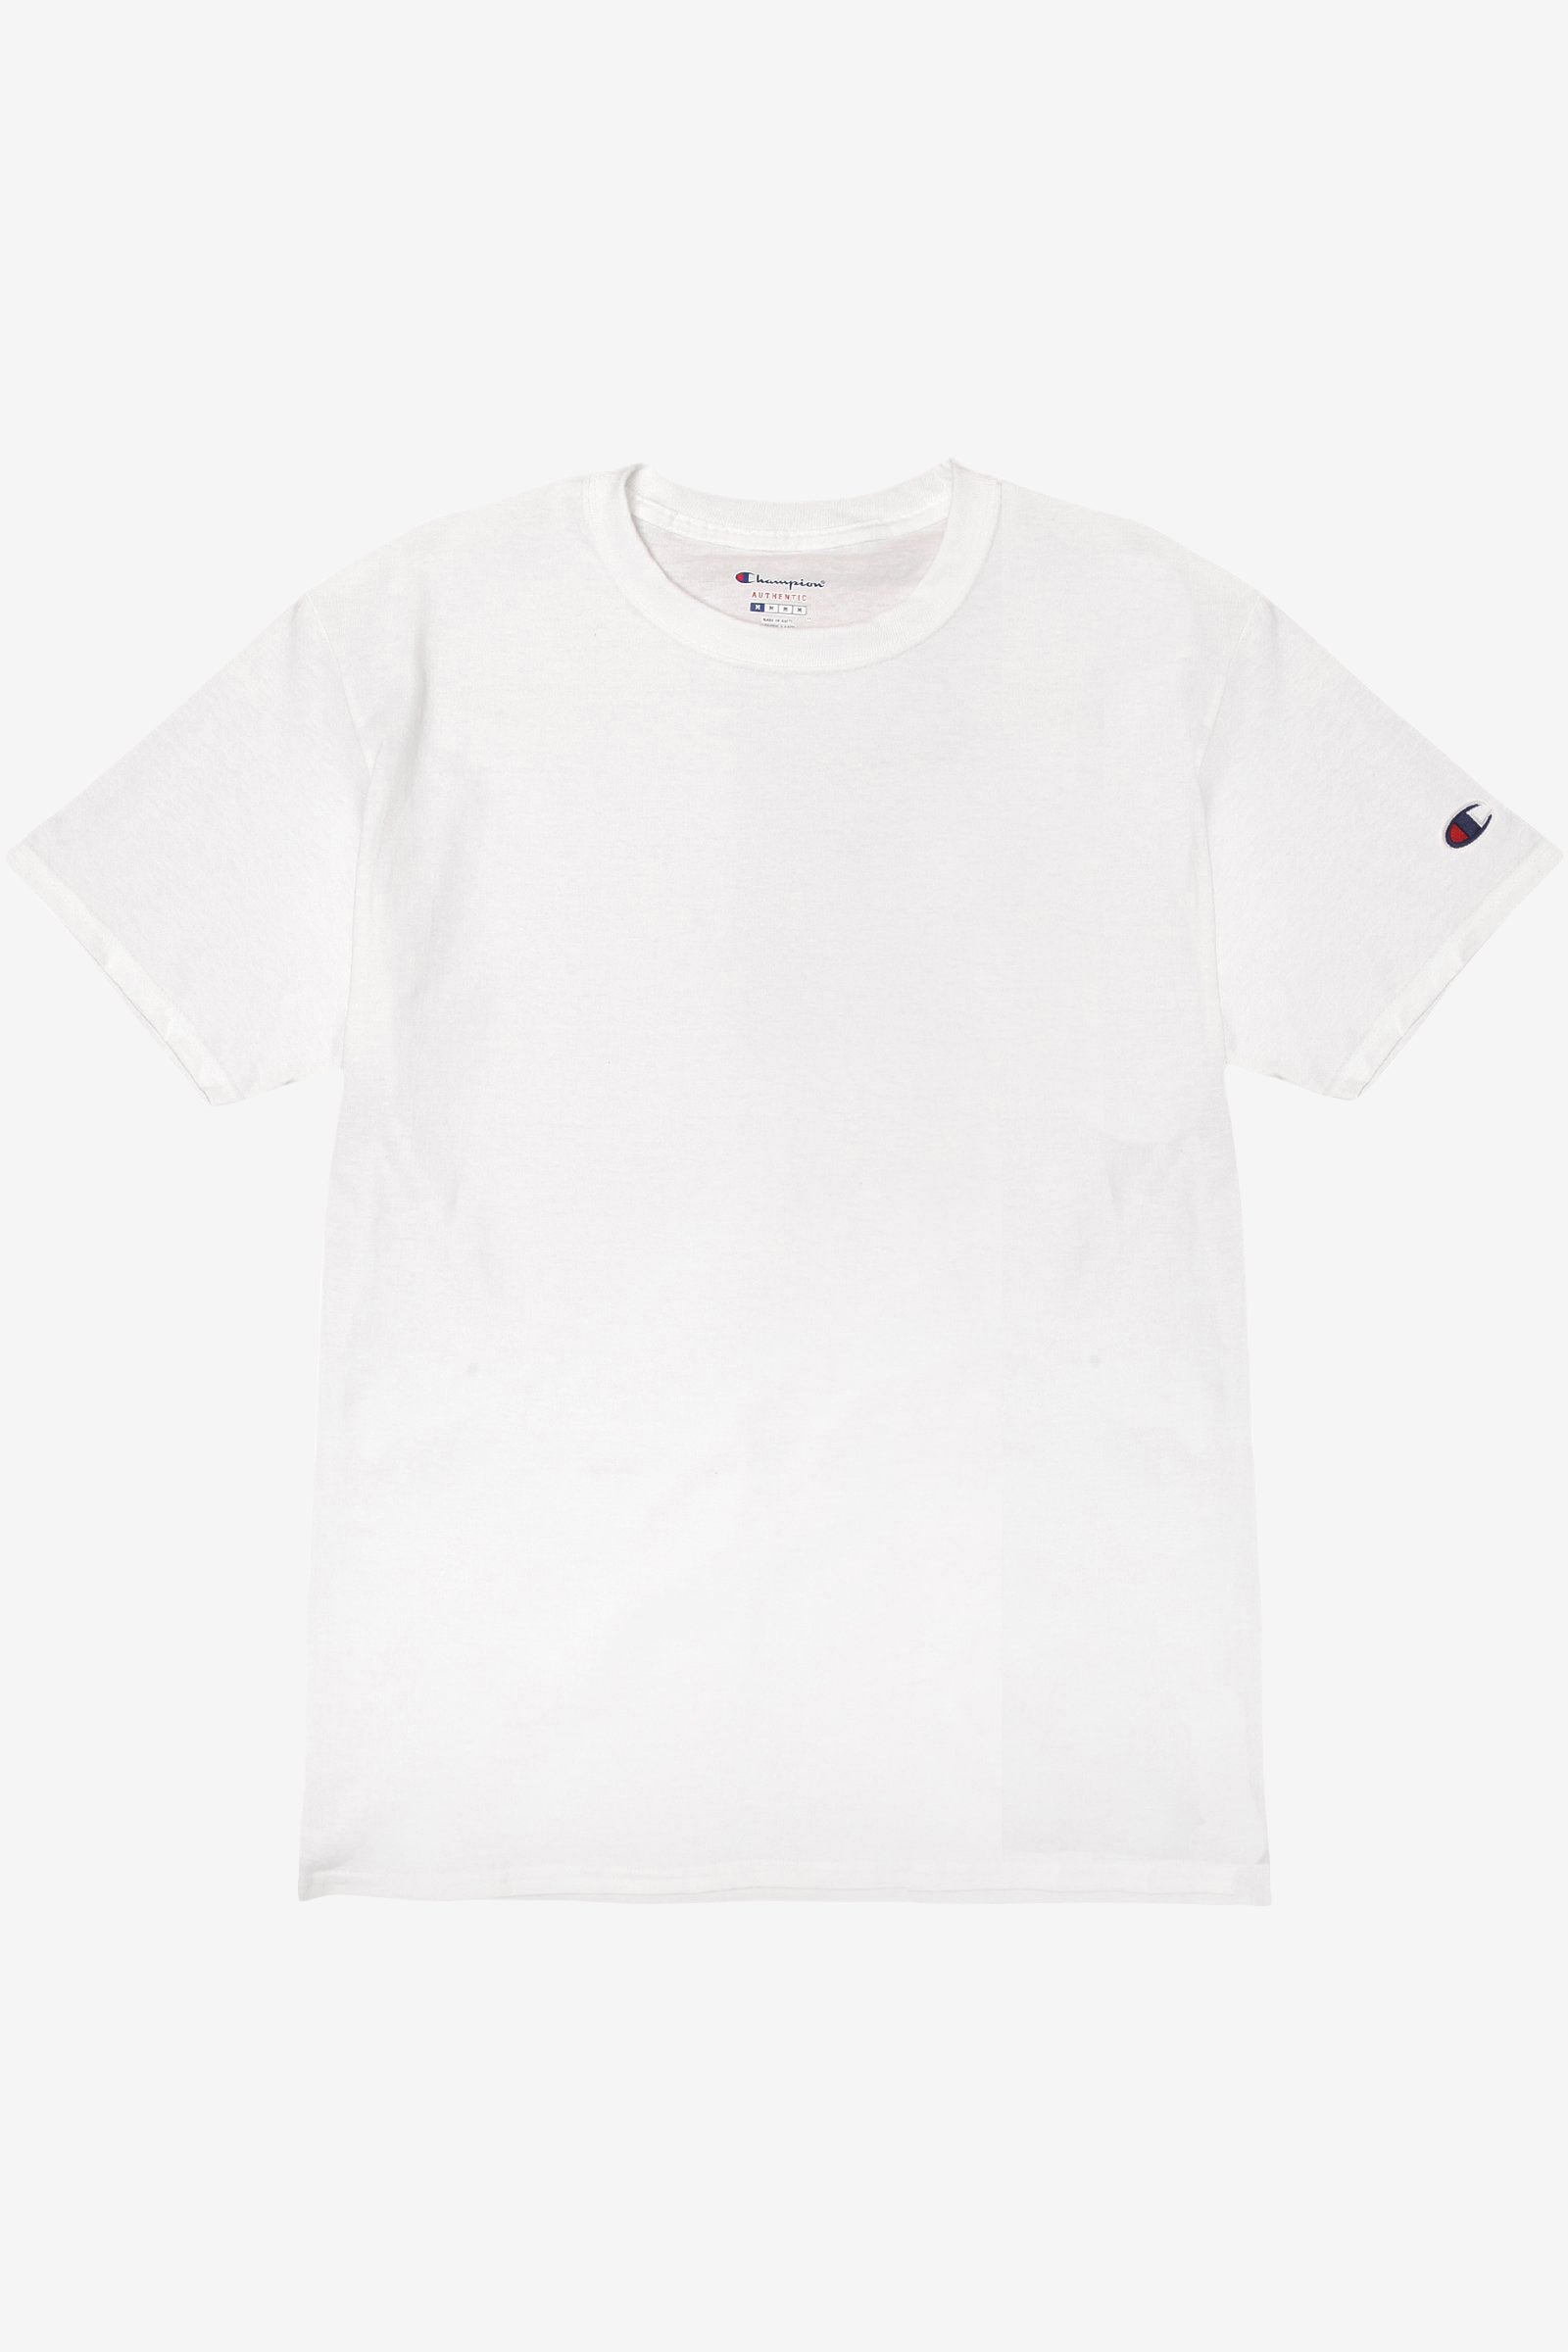 Buy wholesale The French Champion Men's running t-shirt - White